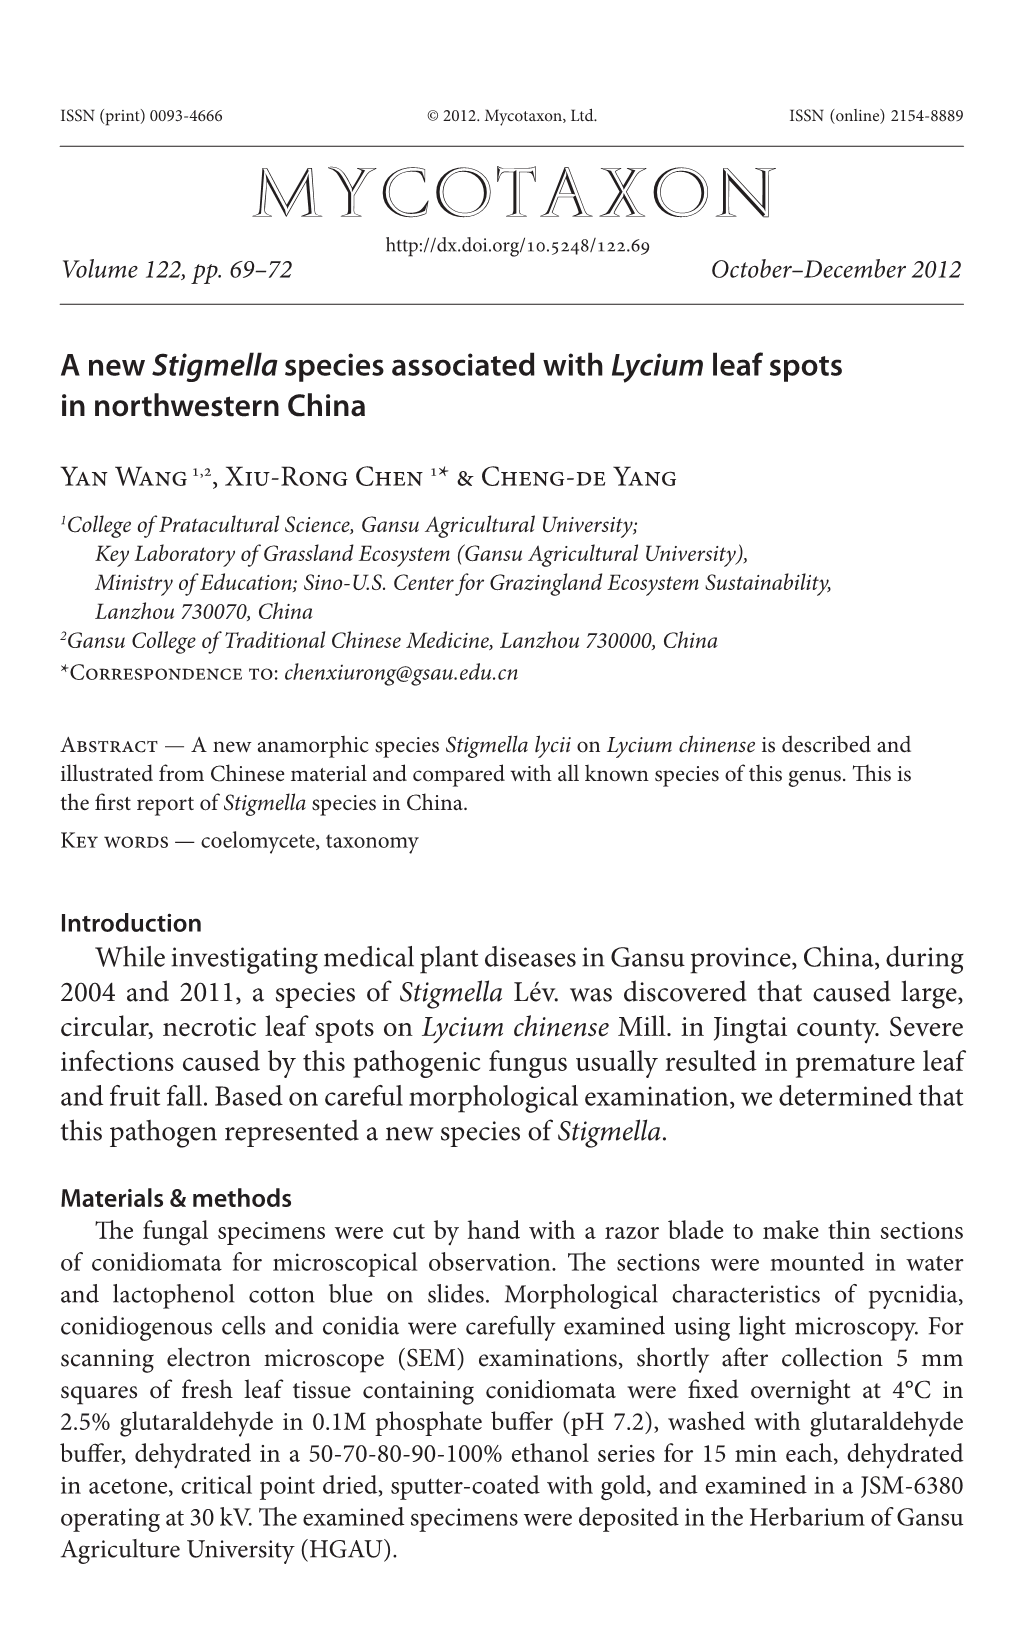 &lt;I&gt;Lycium&lt;/I&gt; Leaf Spots in Northwestern China